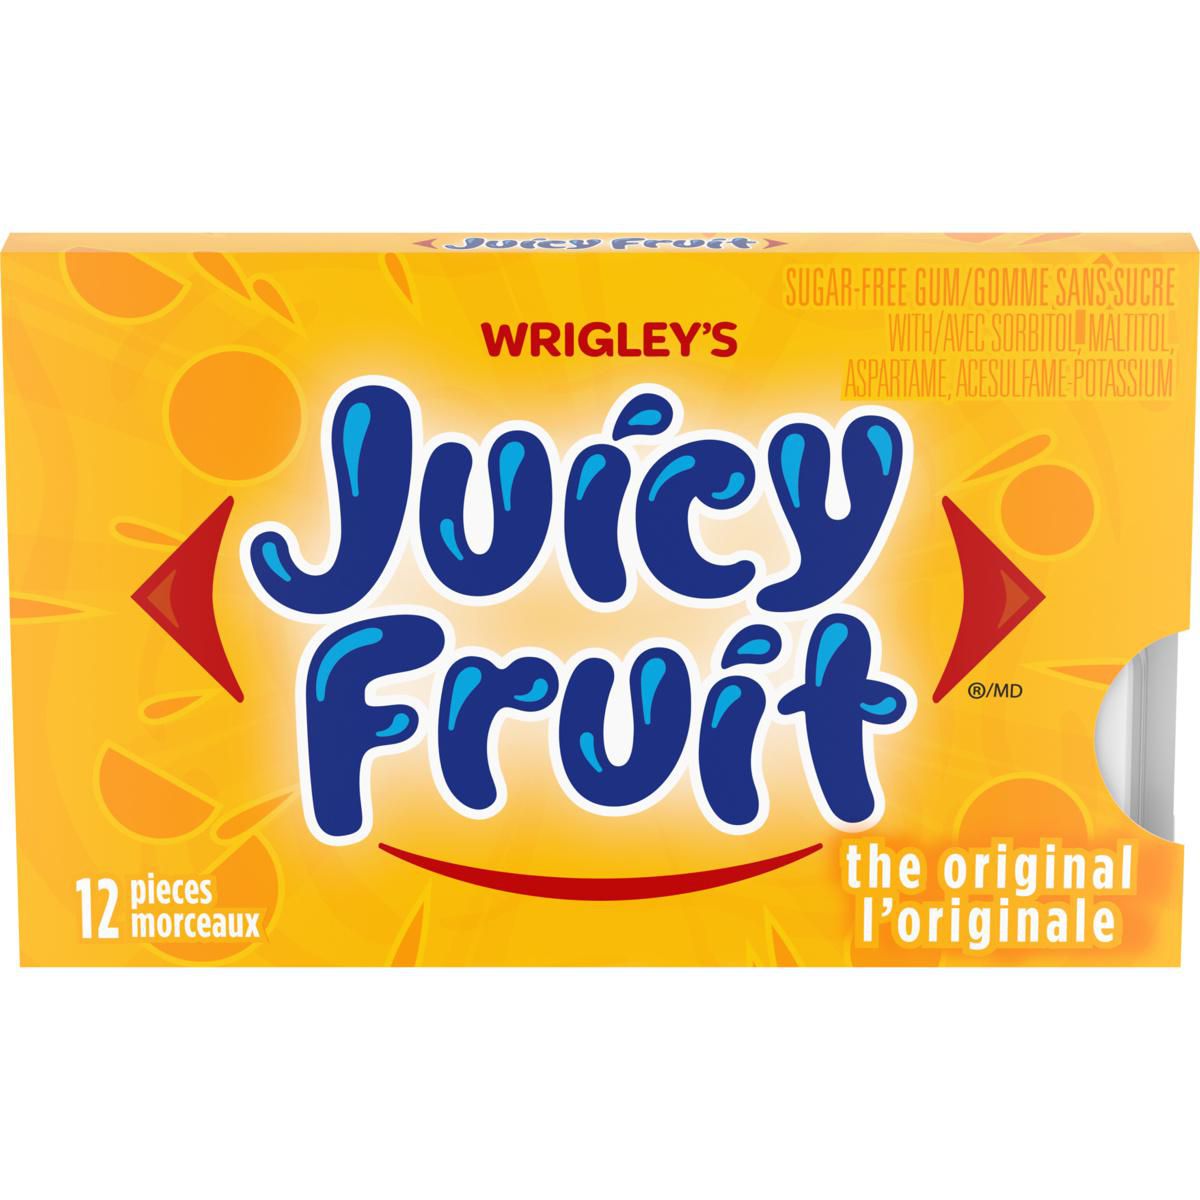 juicy burst gummies